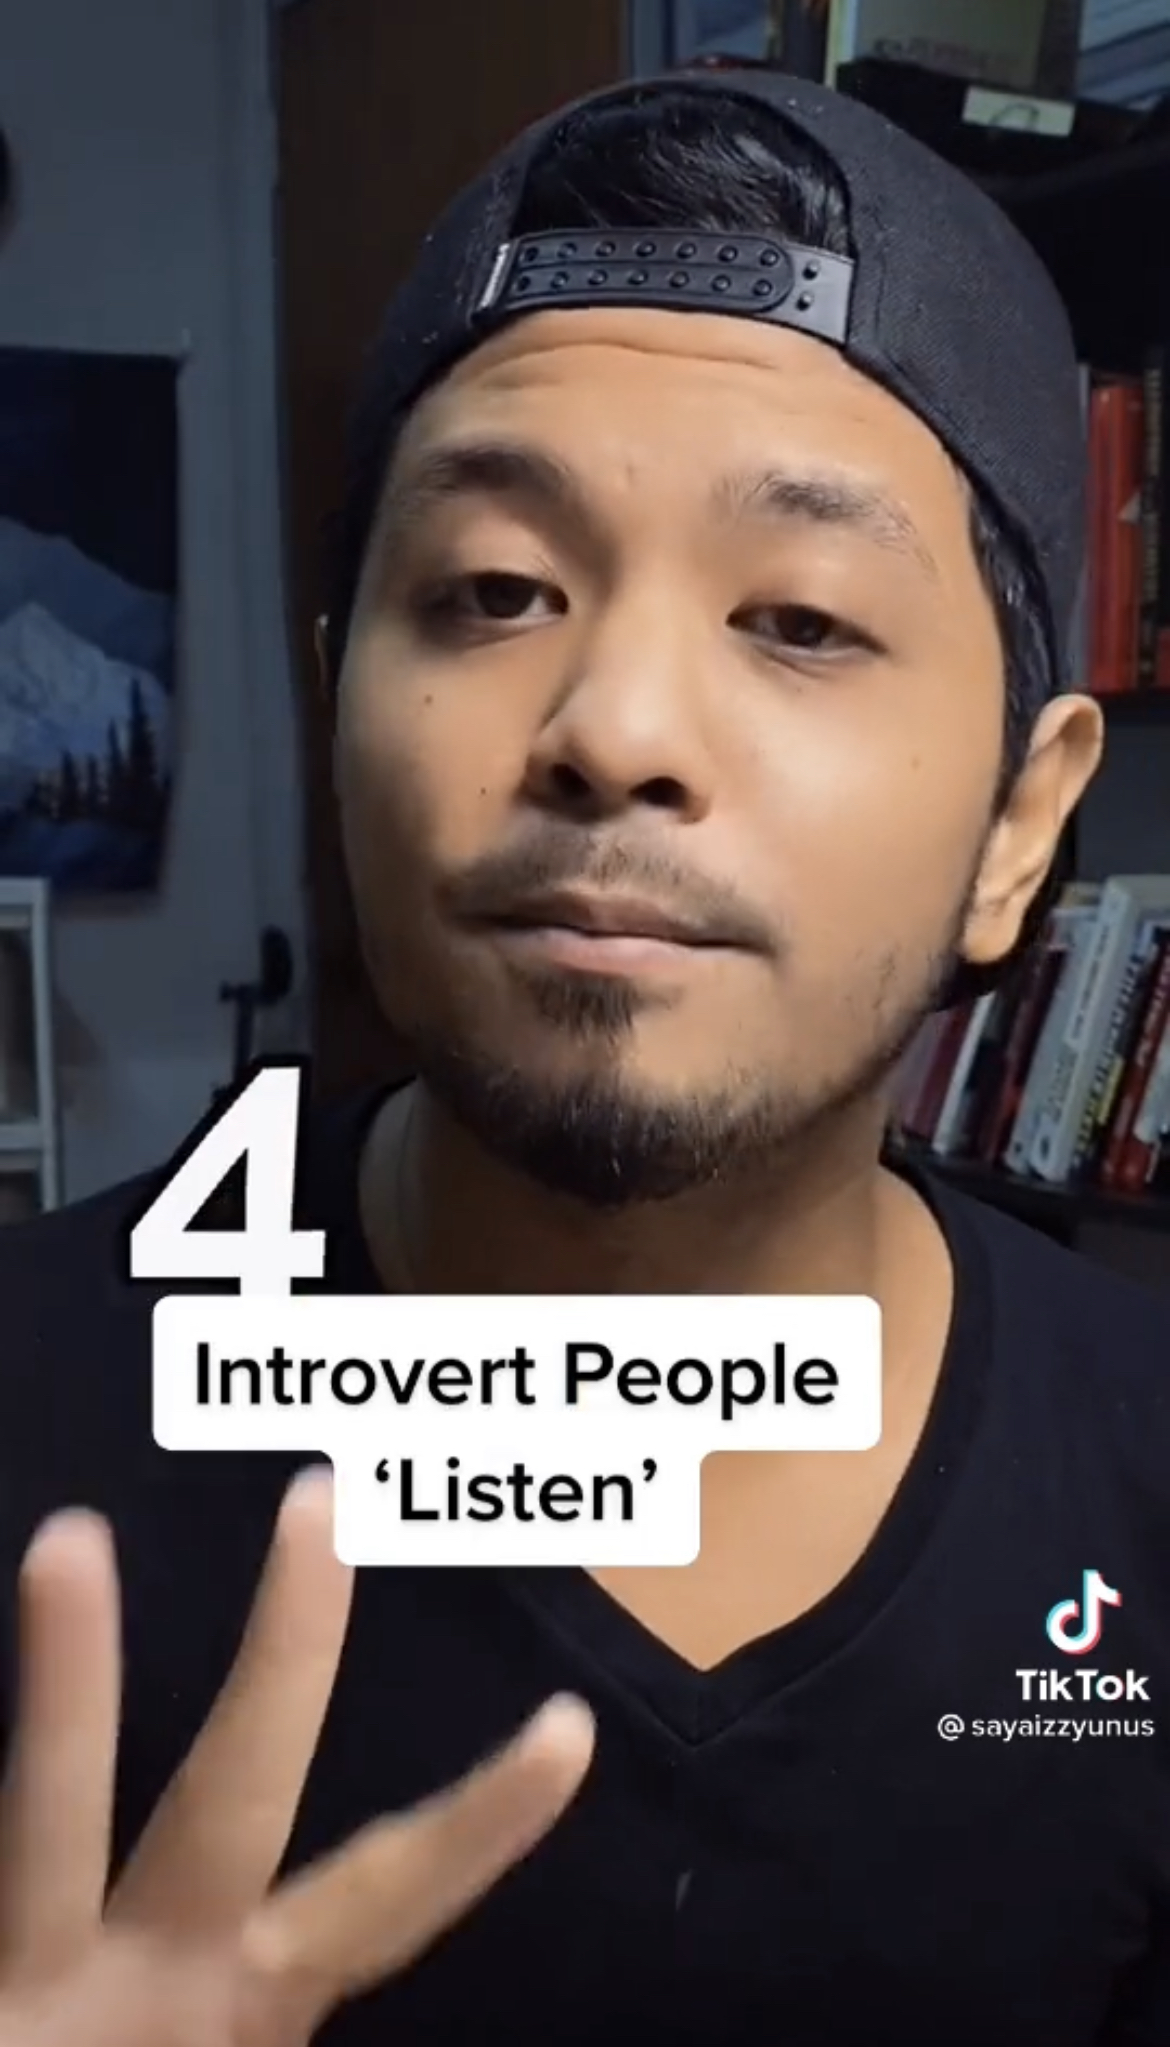 fakta orang introvert